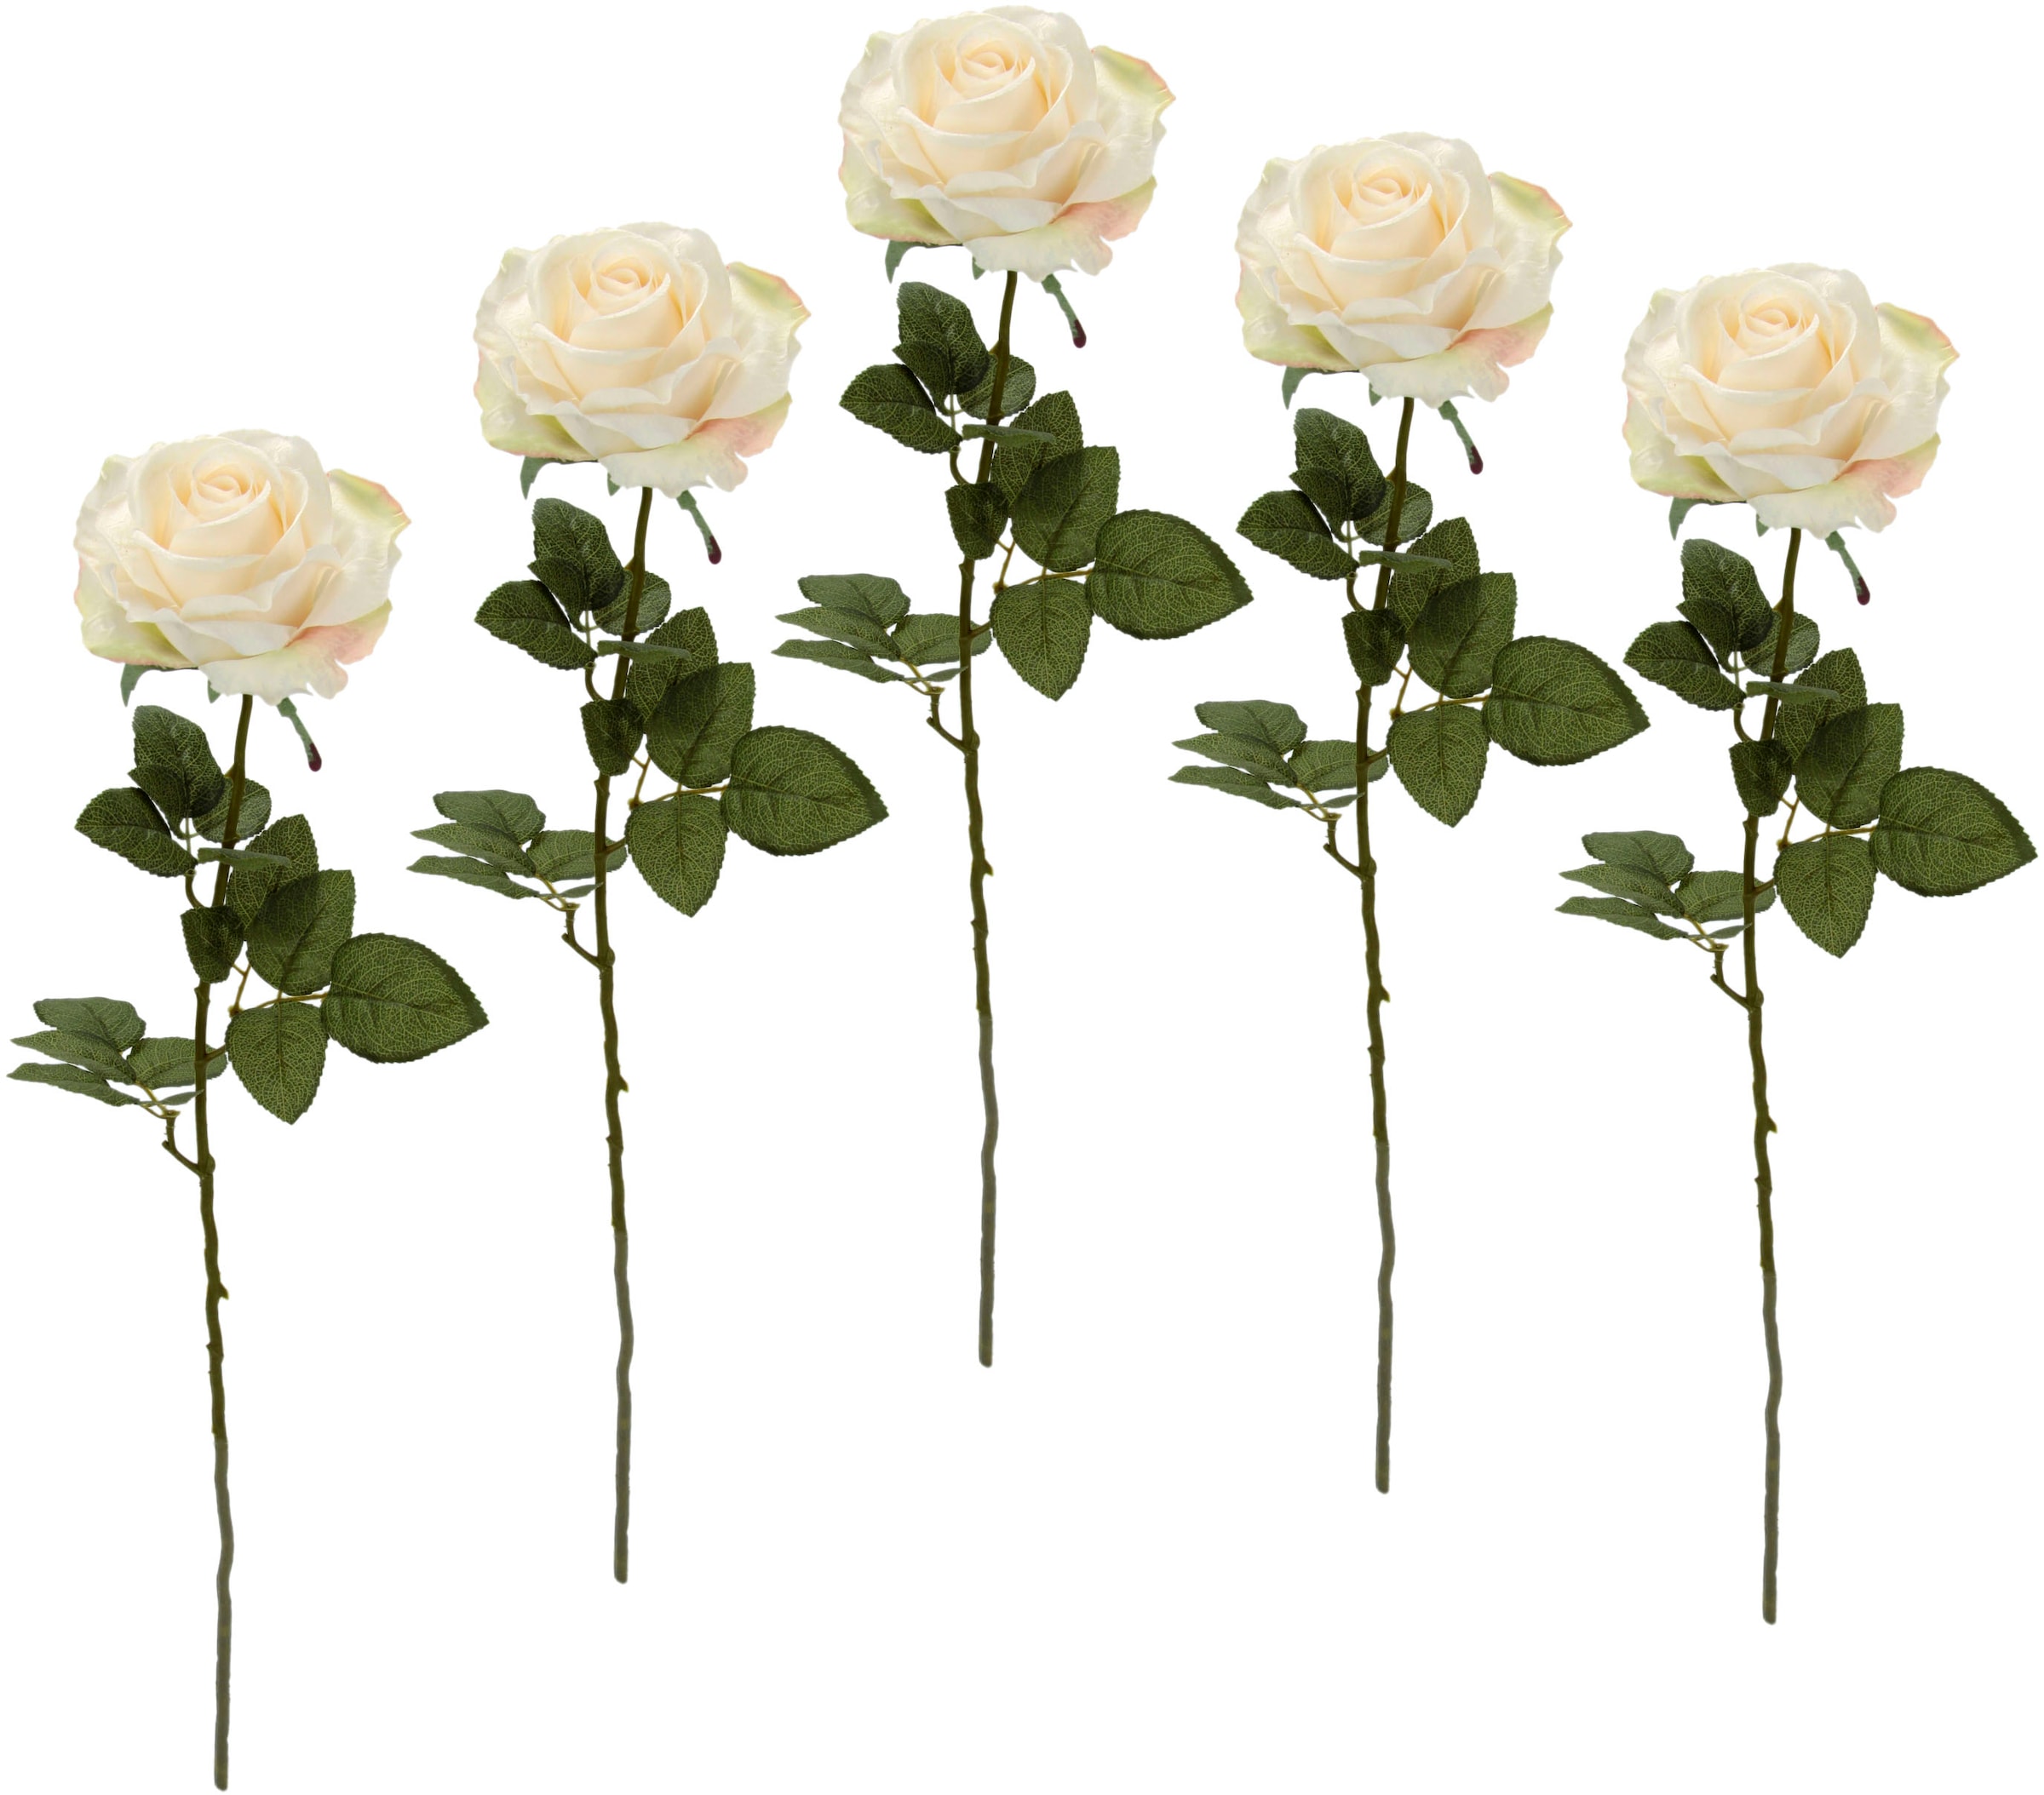 Kunstblume »Rose«, jetzt 5er I.GE.A. Set kaufen